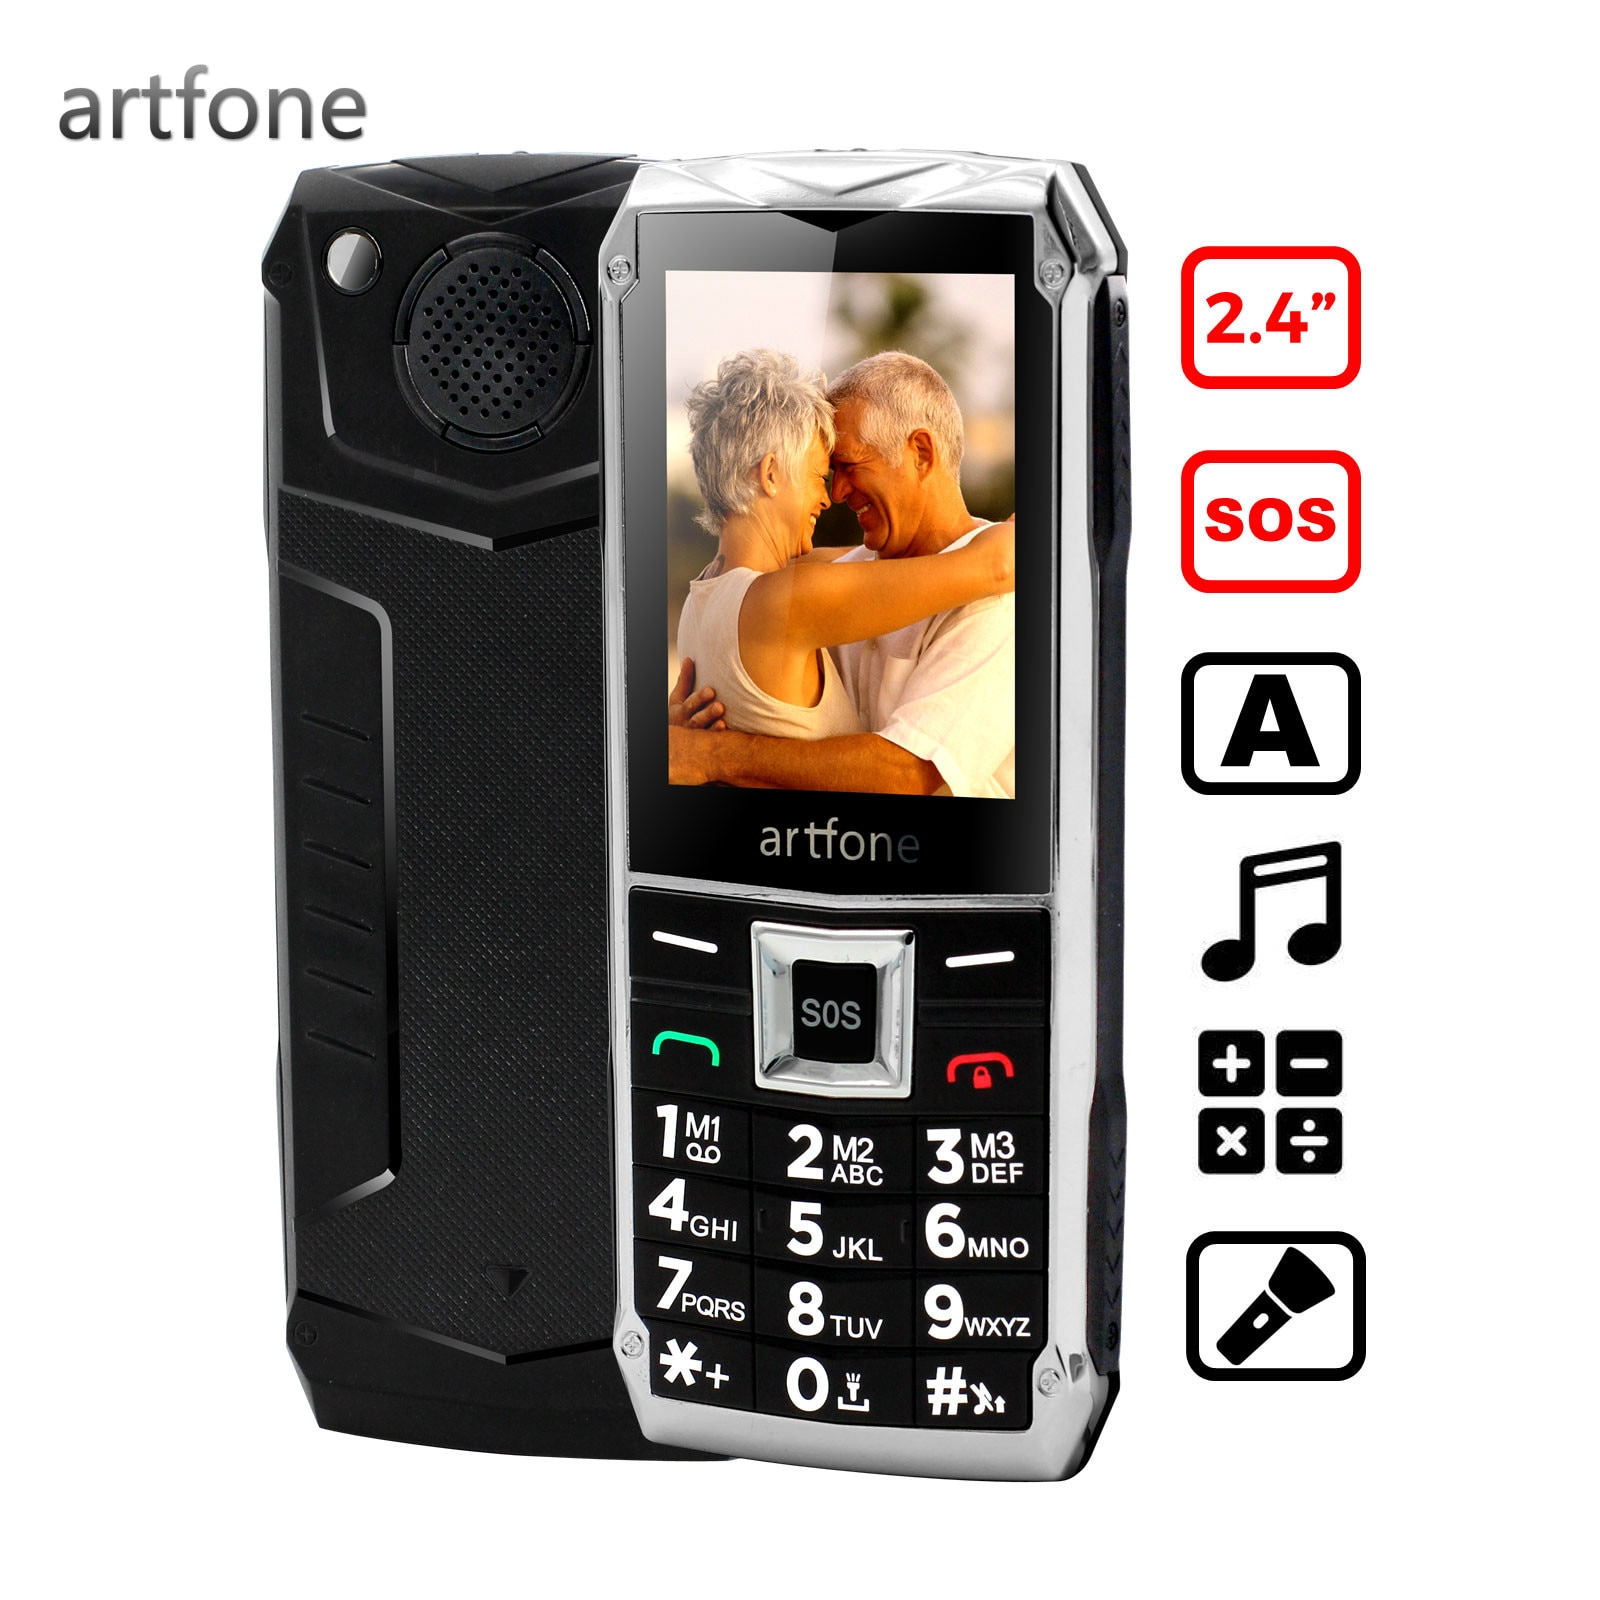 2.4 Inch Kleur Scherm Grote Knop Mobiele Telefoon Voor Ouderen, artfone Dual Sim Dual Standby Unlocked Gsm Sos Mobiele Telefoon (2G)